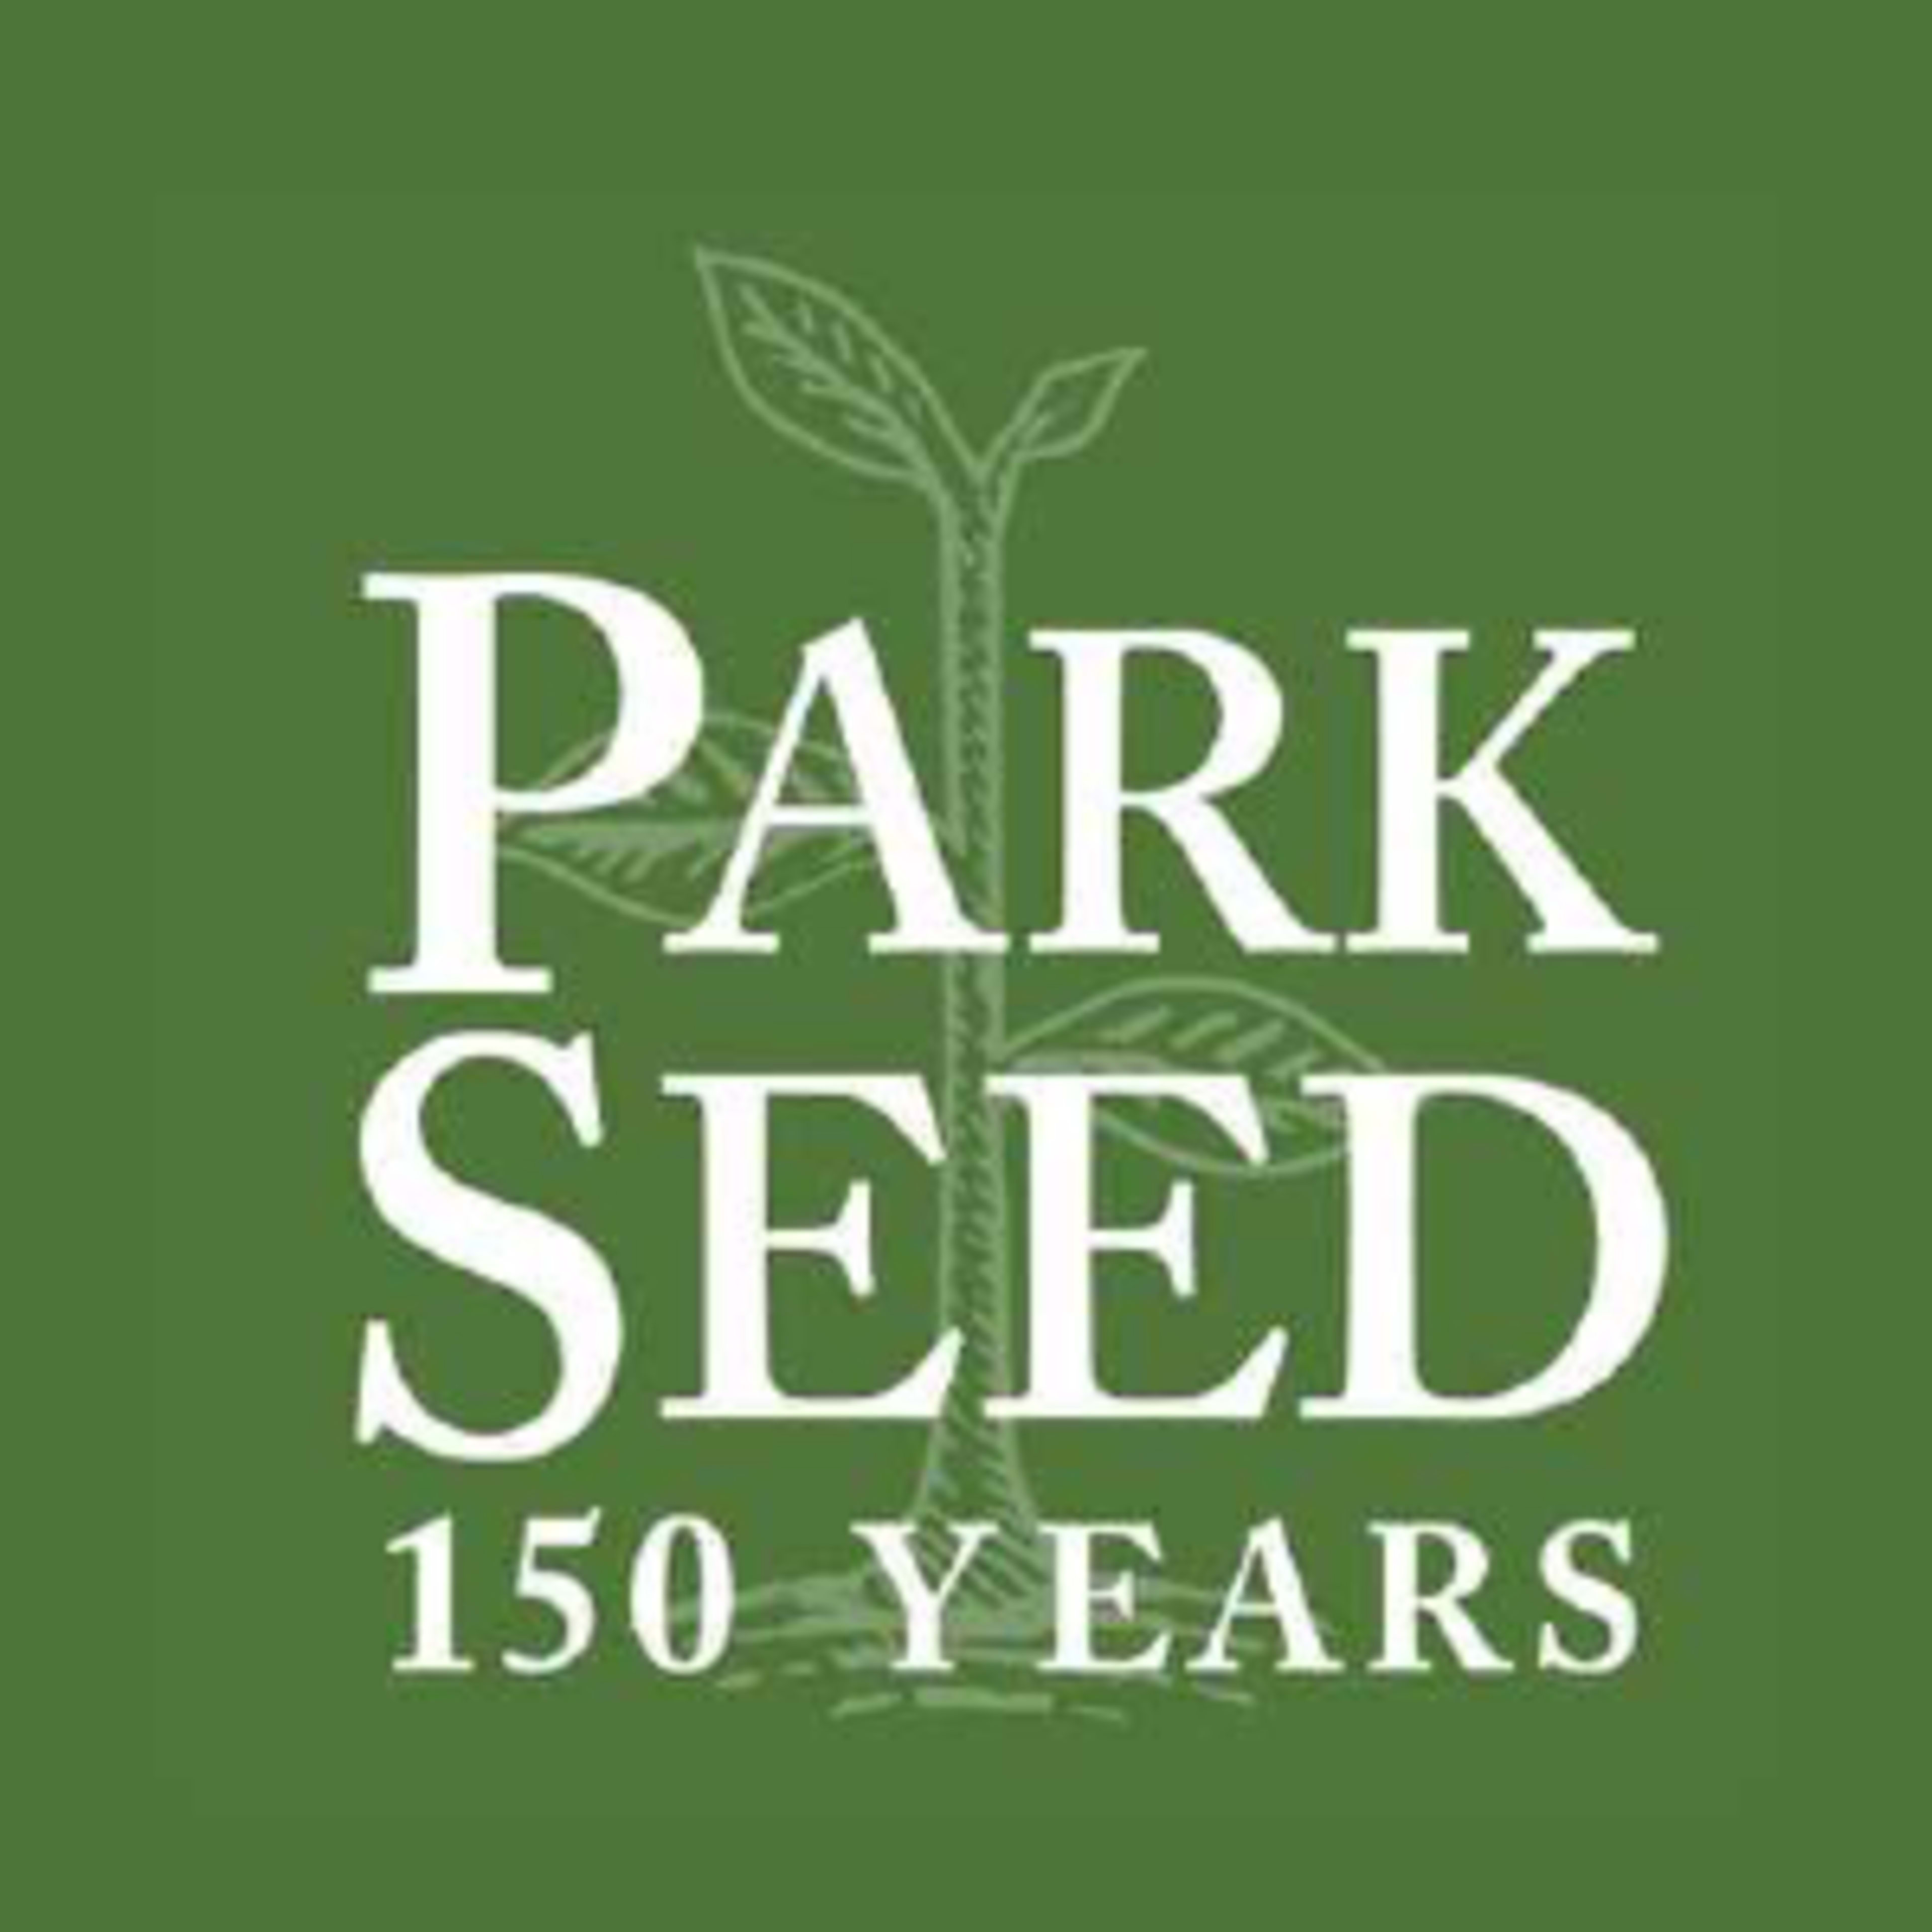 Park SeedCode